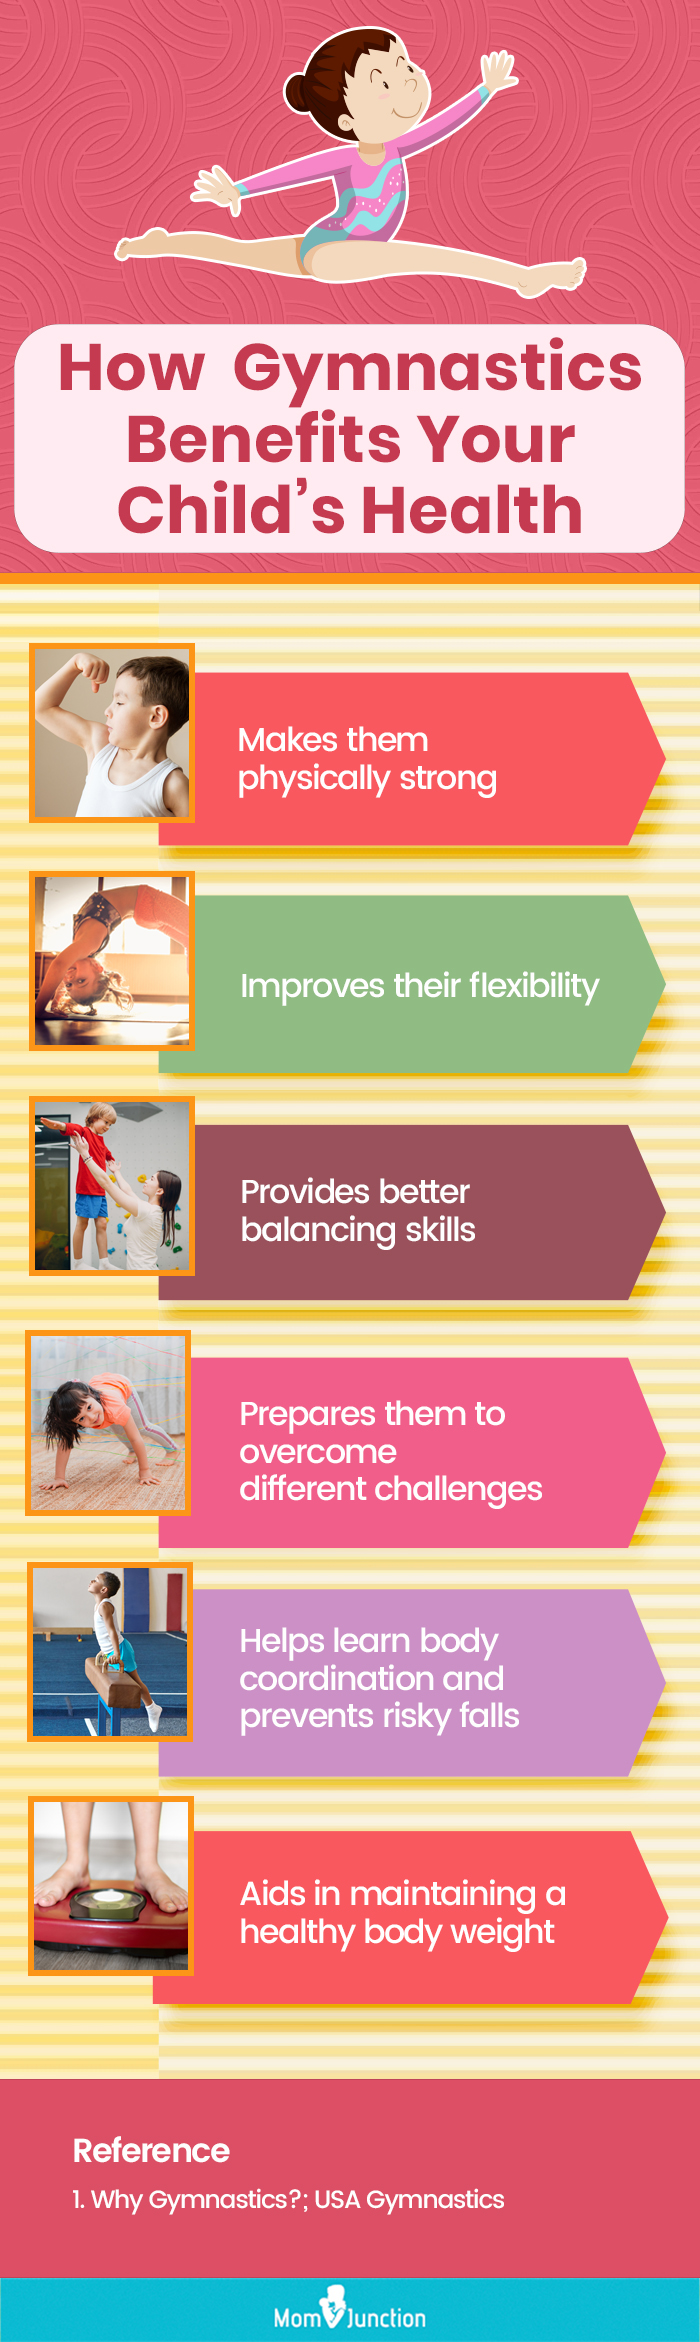 how gymnastics benefits your child’s health (infographic)